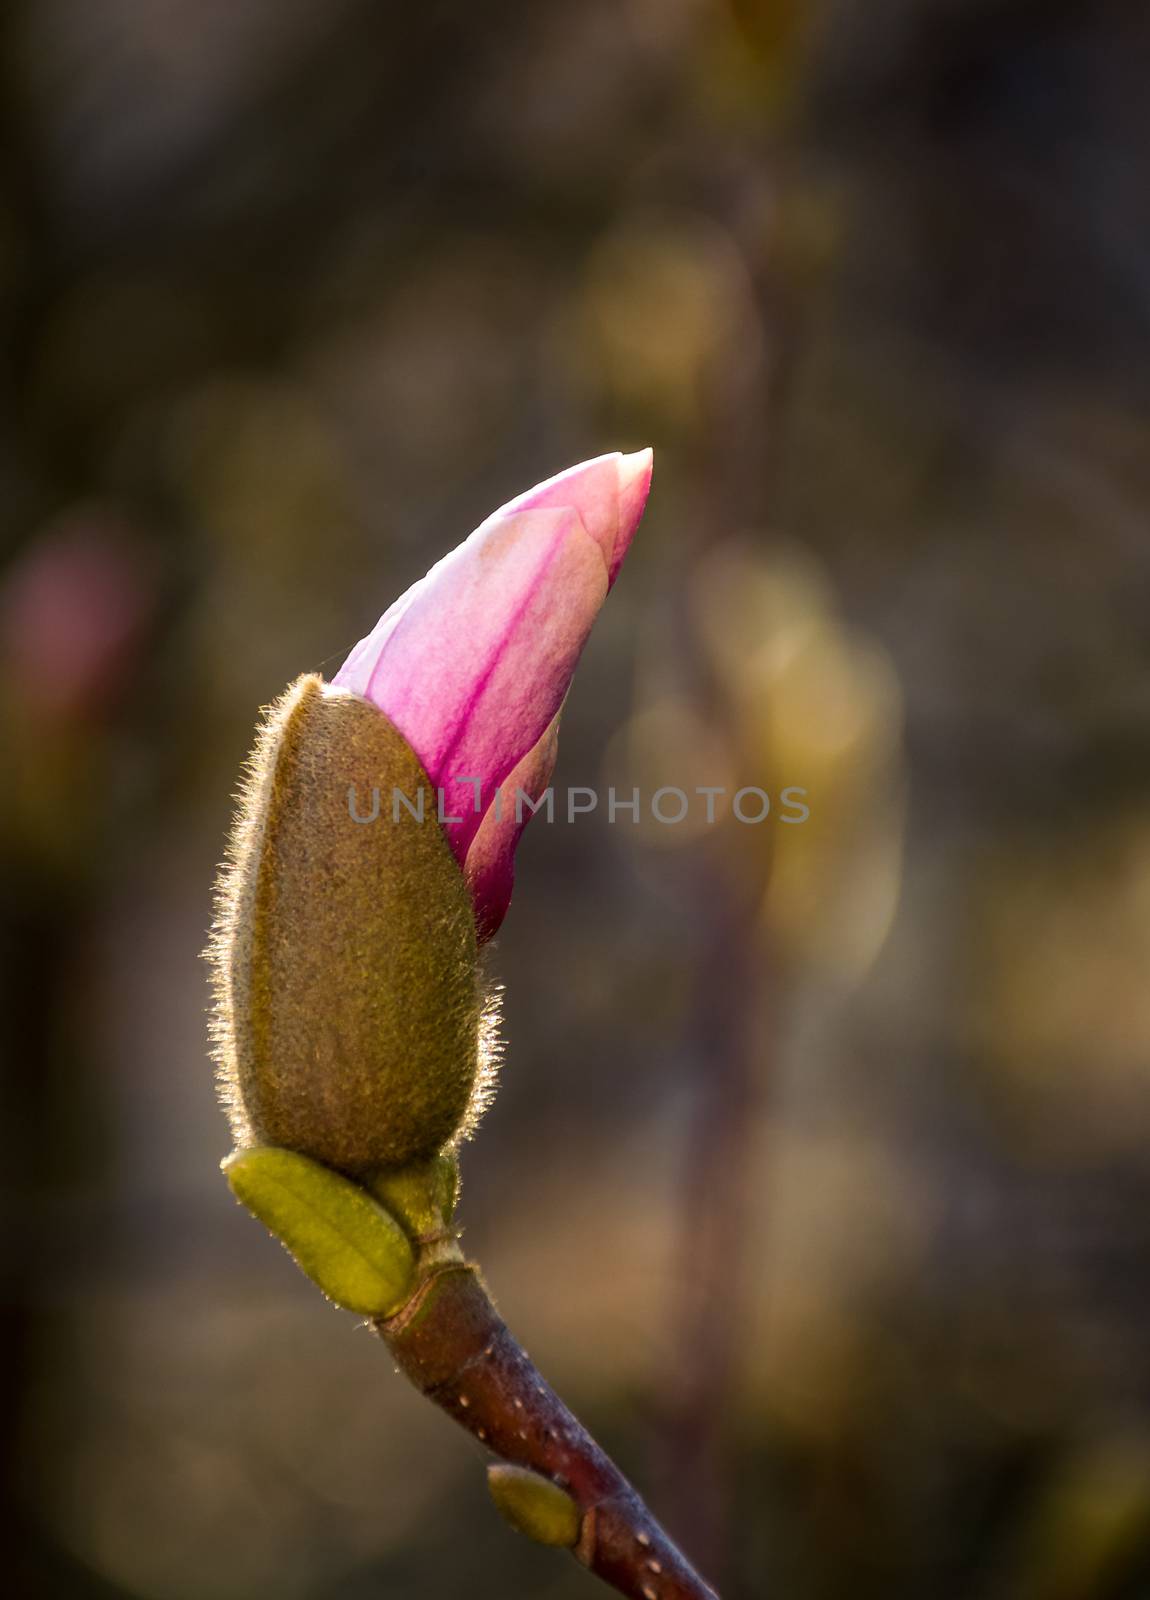 Magenta Magnolia flower opening in springtime by Pellinni